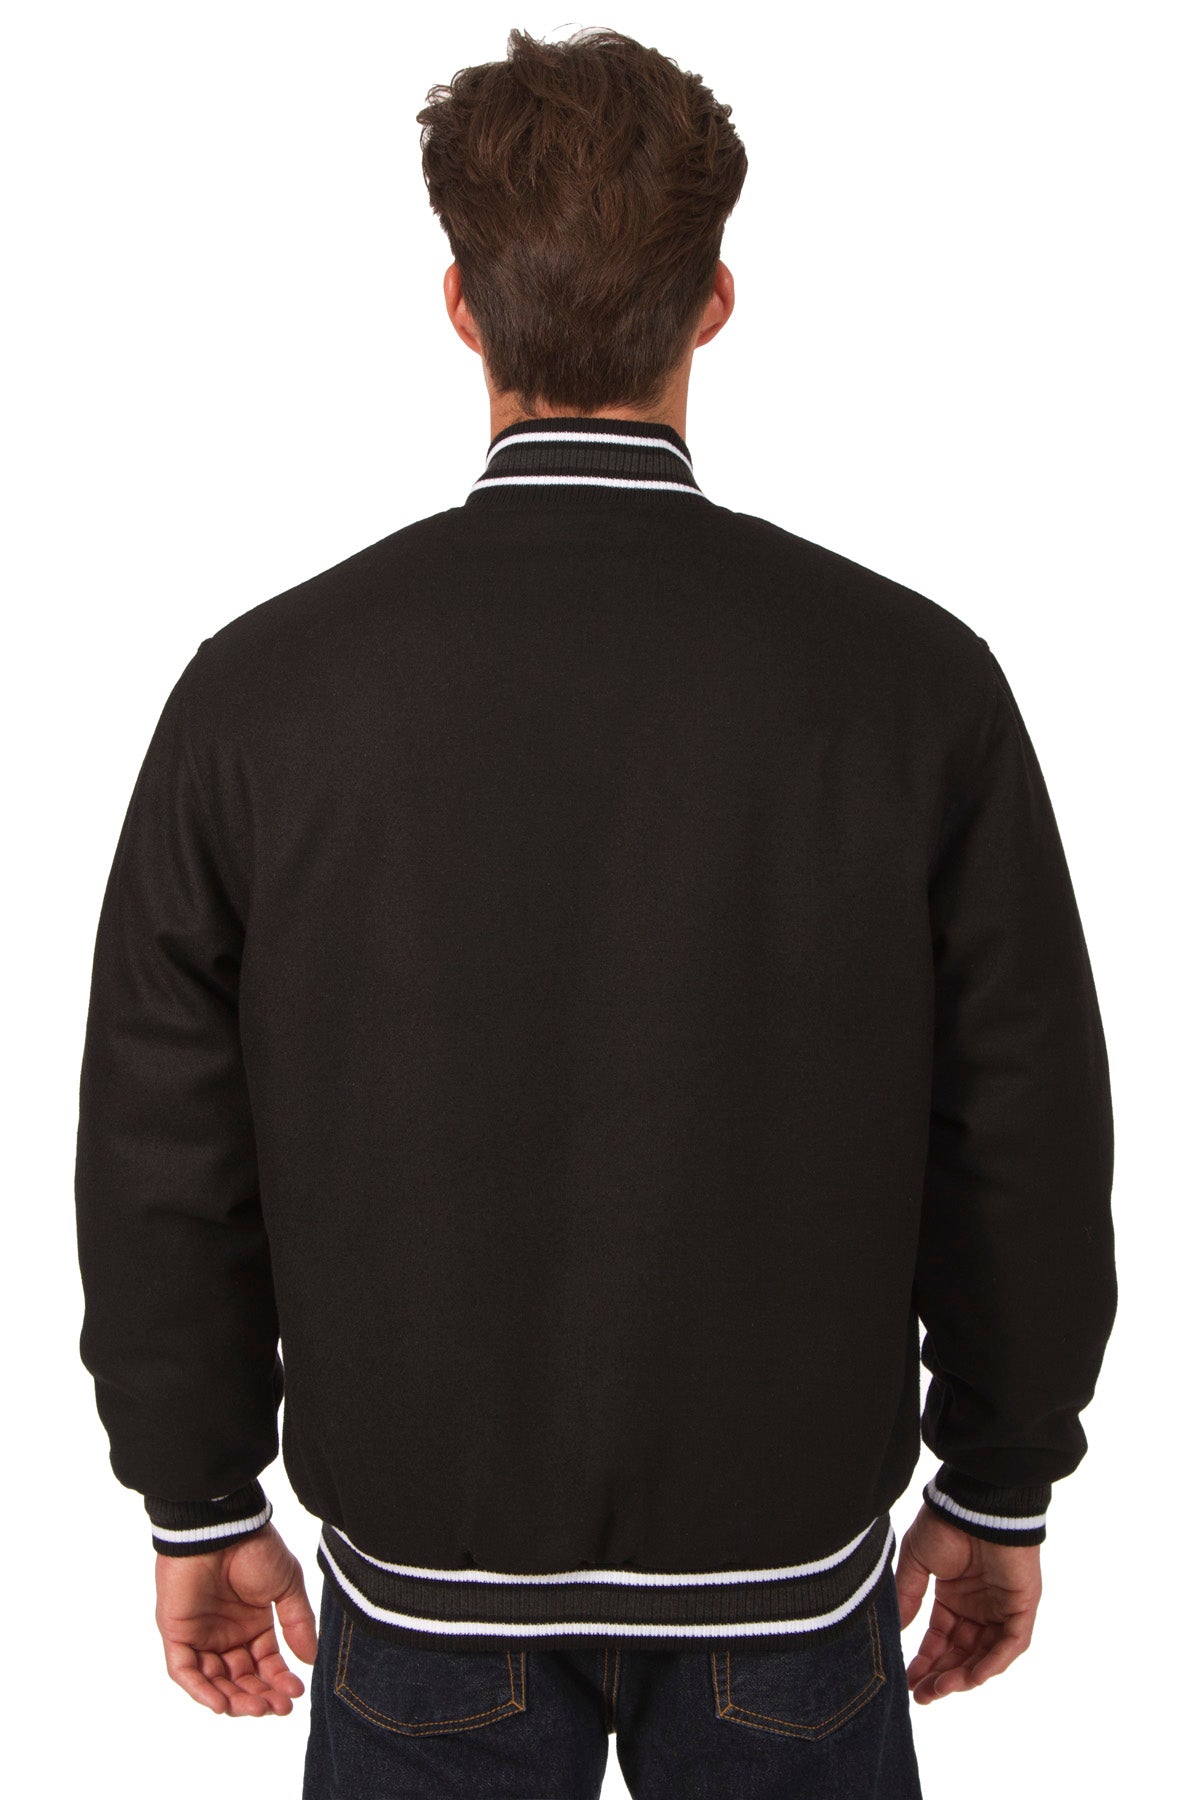 Dodge Ram Wool Varsity Jacket - Black | J.H. Sports Jackets